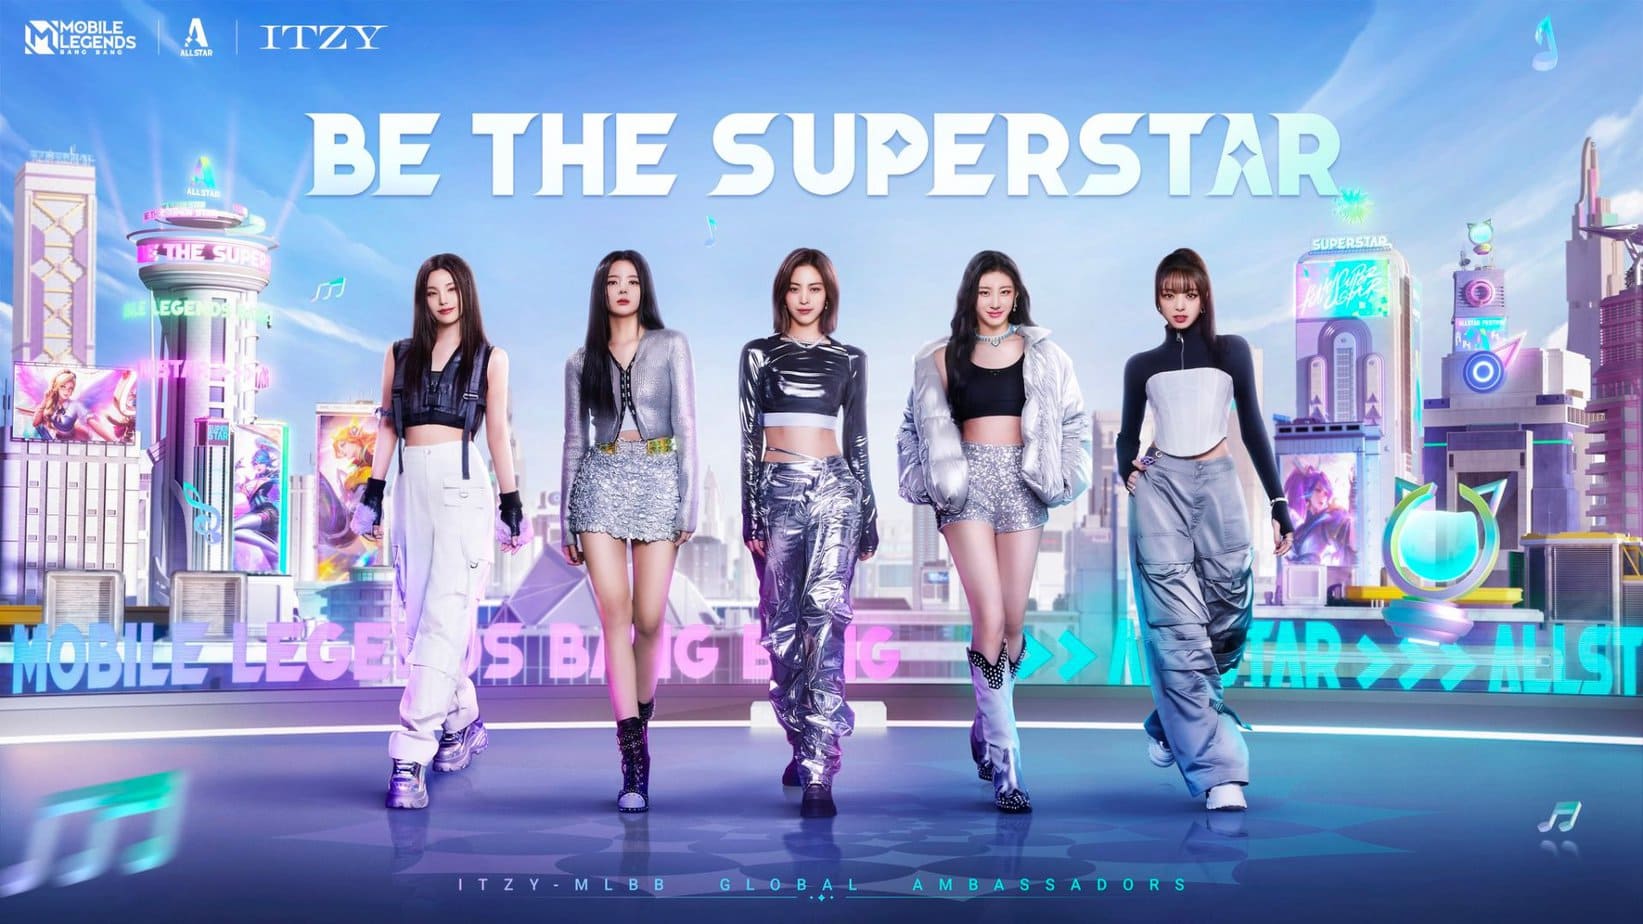 Hype! Kpop sensation ITZY is Mobile Legends’ newest brand ambassador - ONE Esports